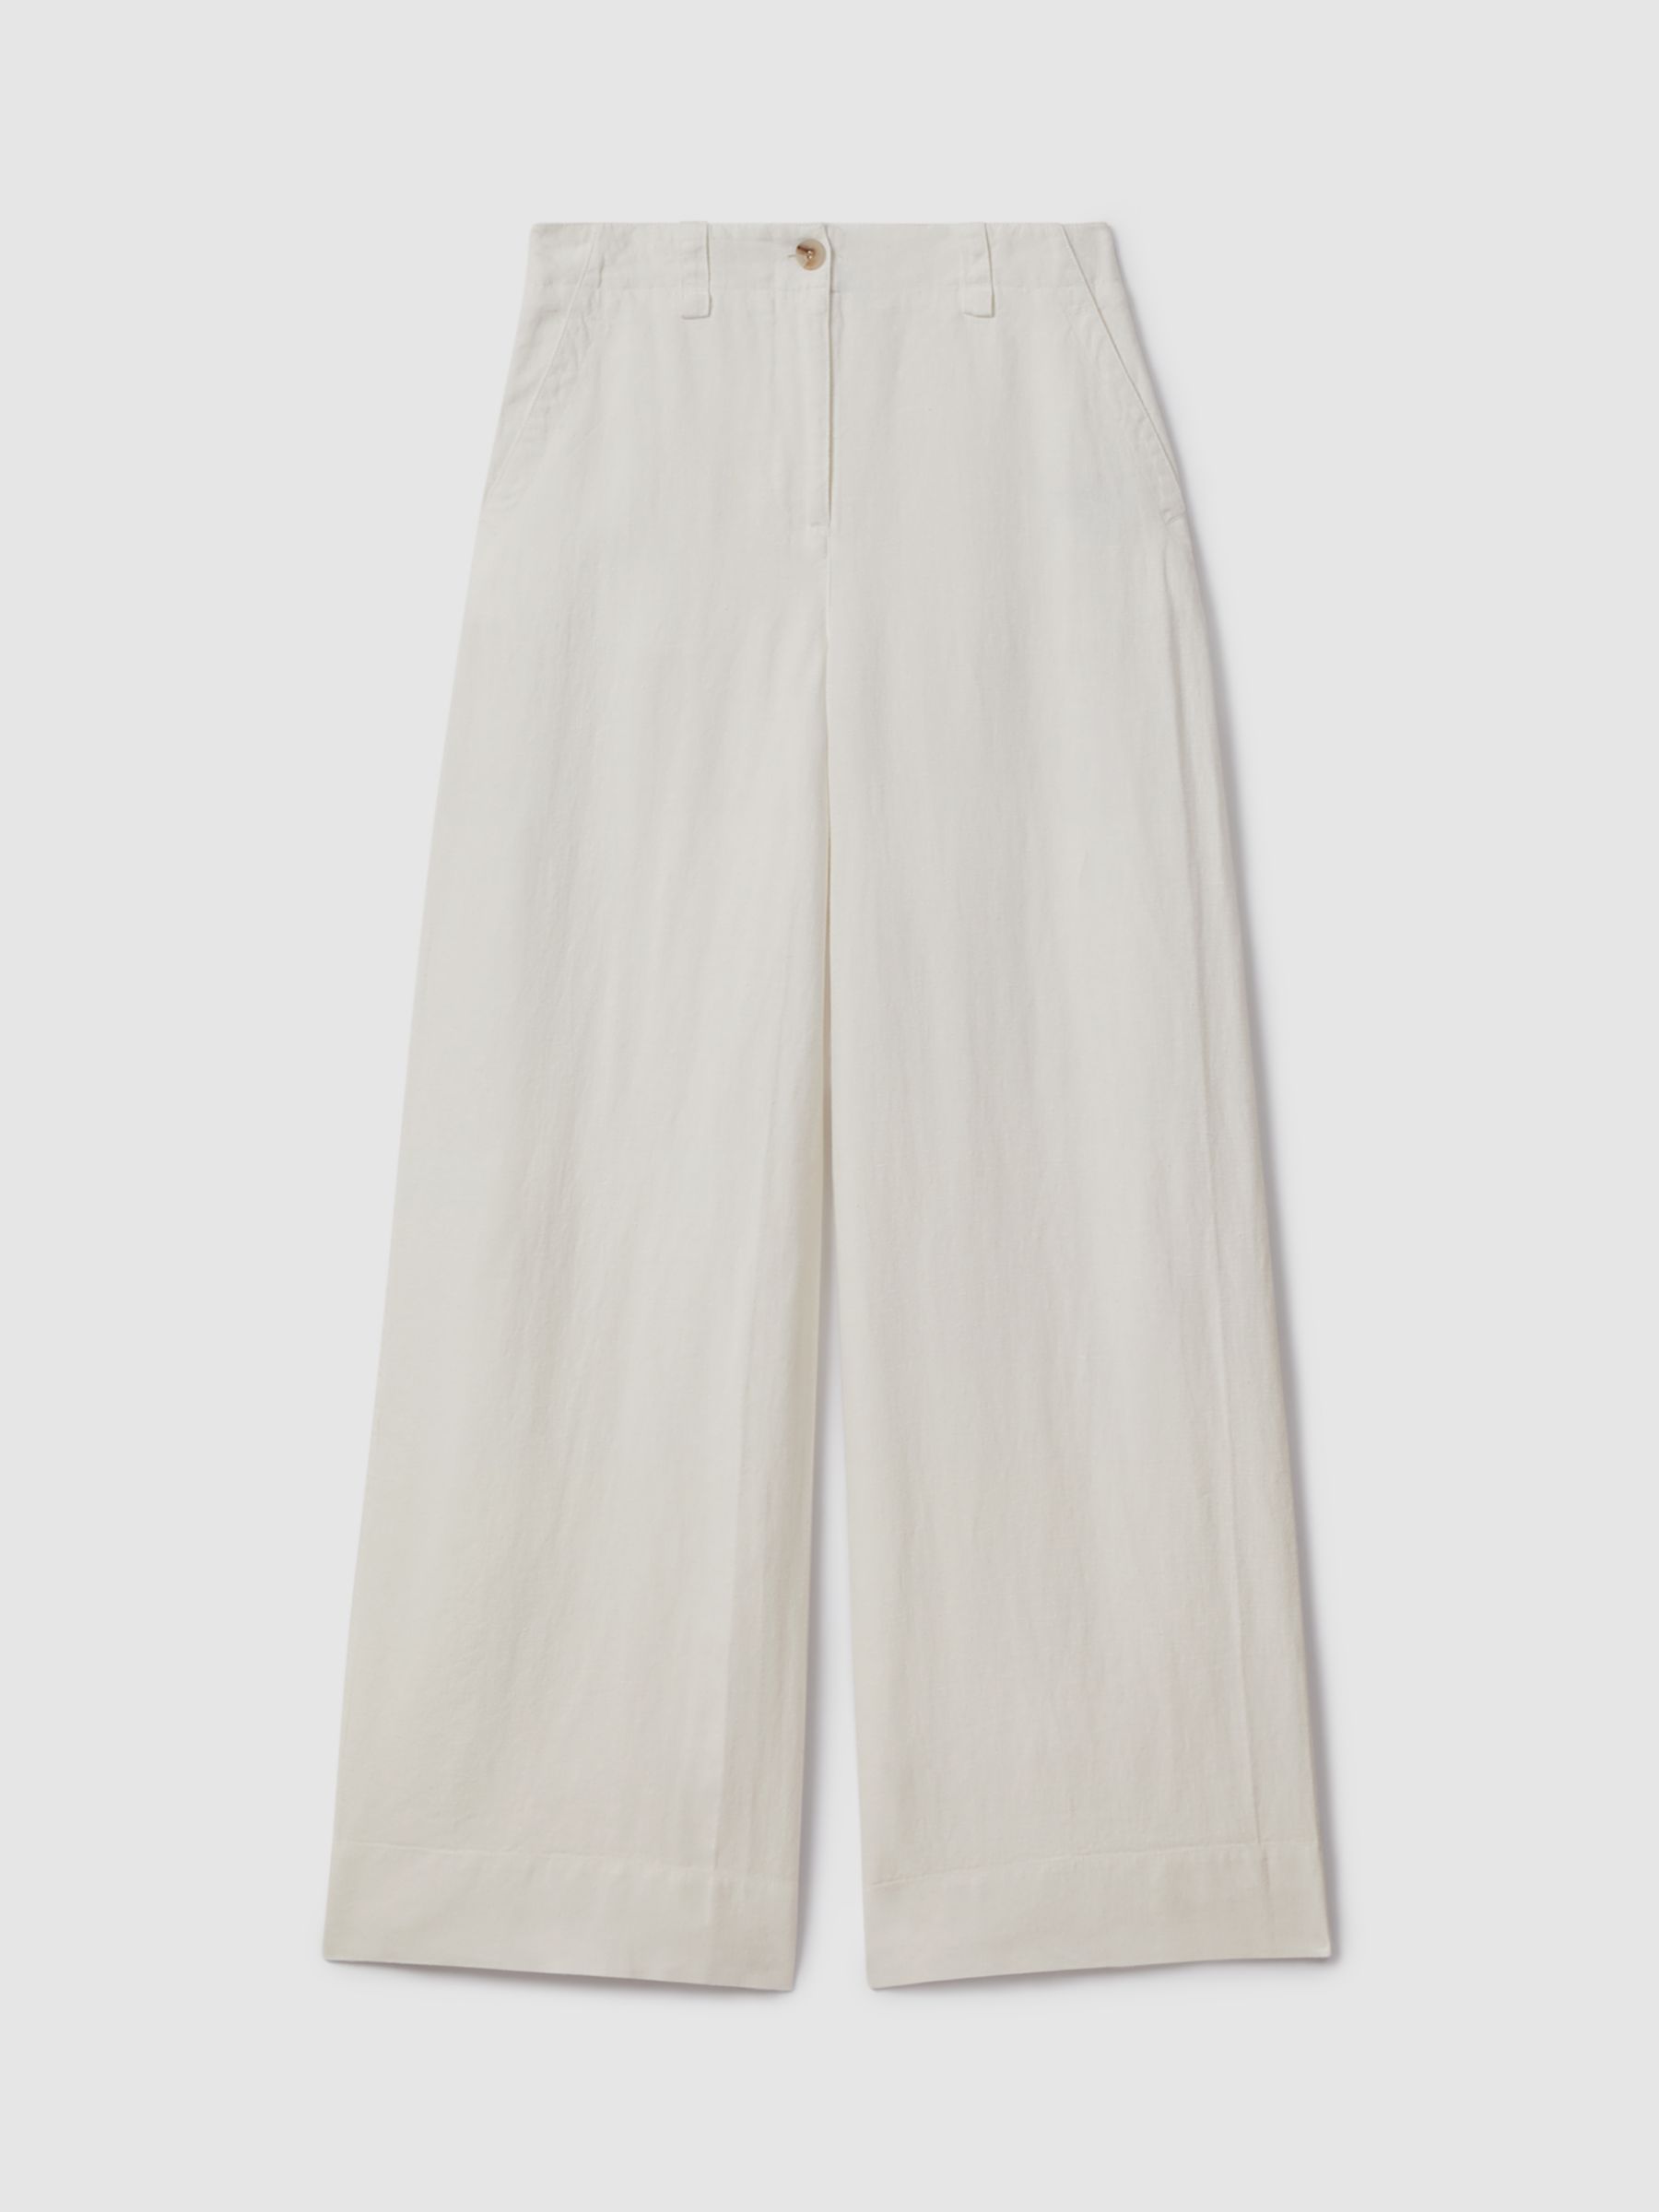 Reiss Demi Garment Dye Linen Wide Leg Trousers, White, 4R